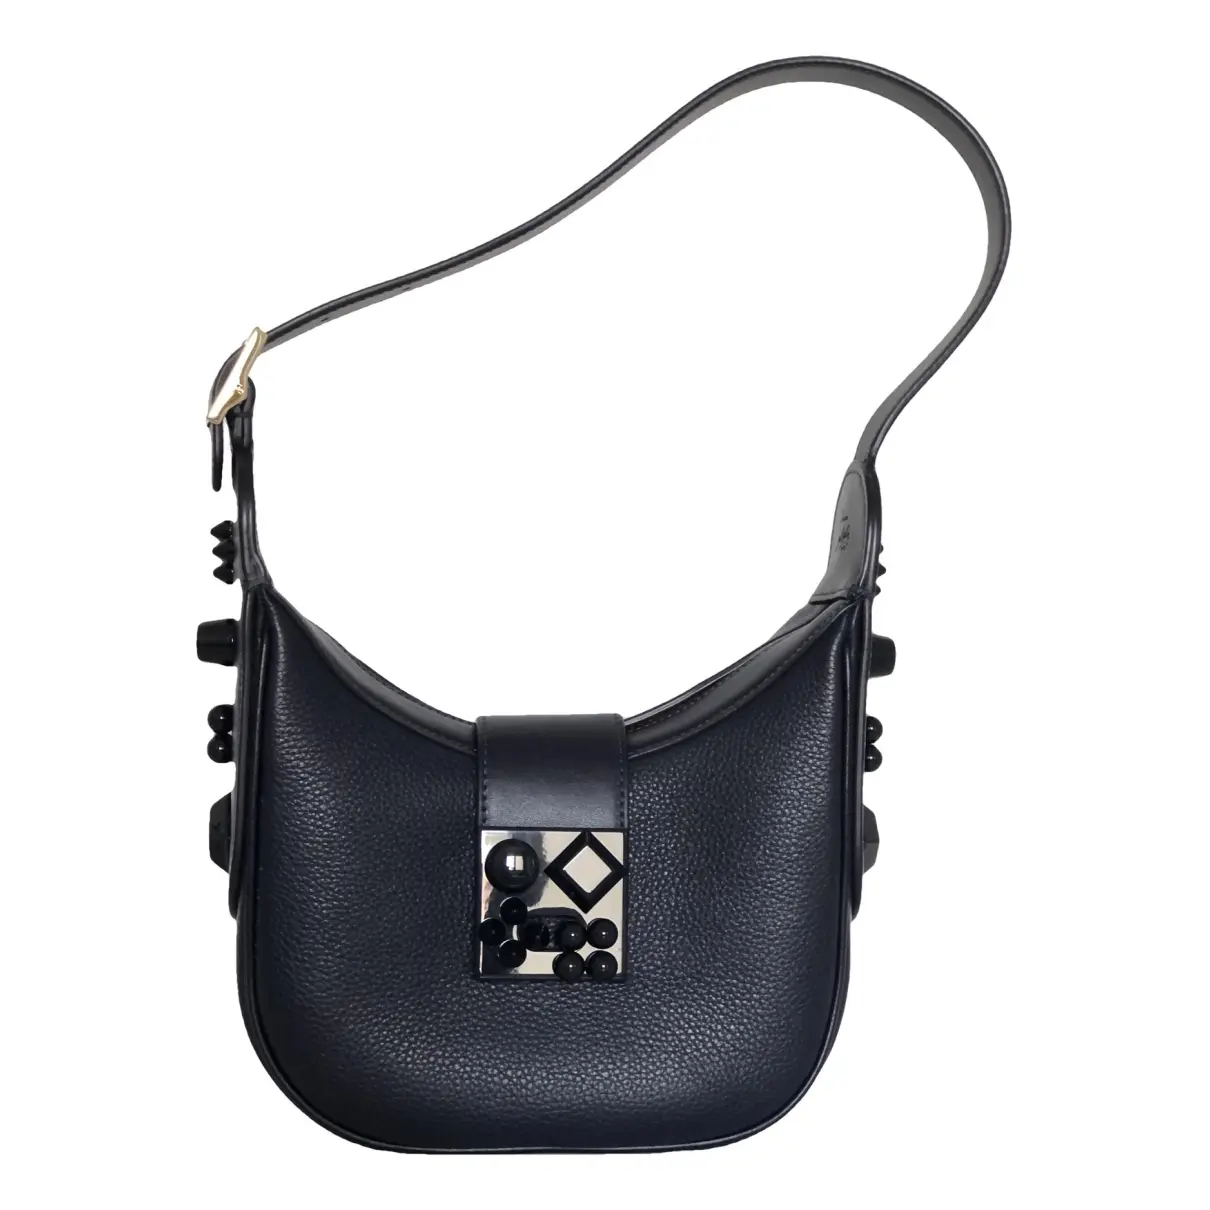 Carasky leather handbag